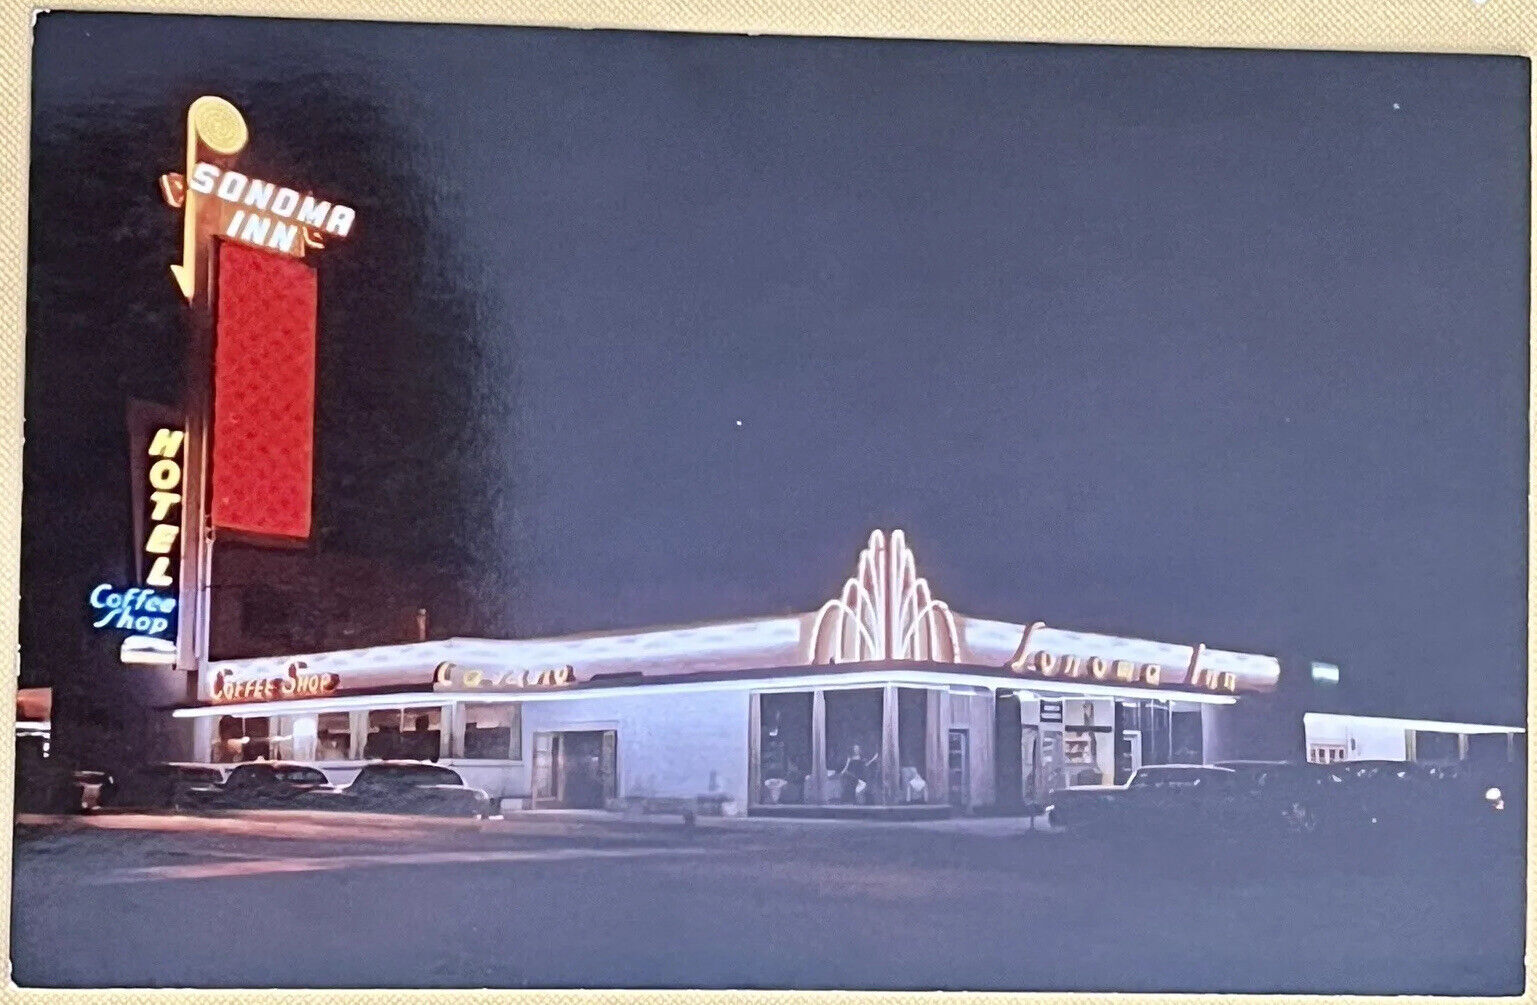 Winnemucca Nevada Hotel Sonoma Inn Night View Postcard c1950